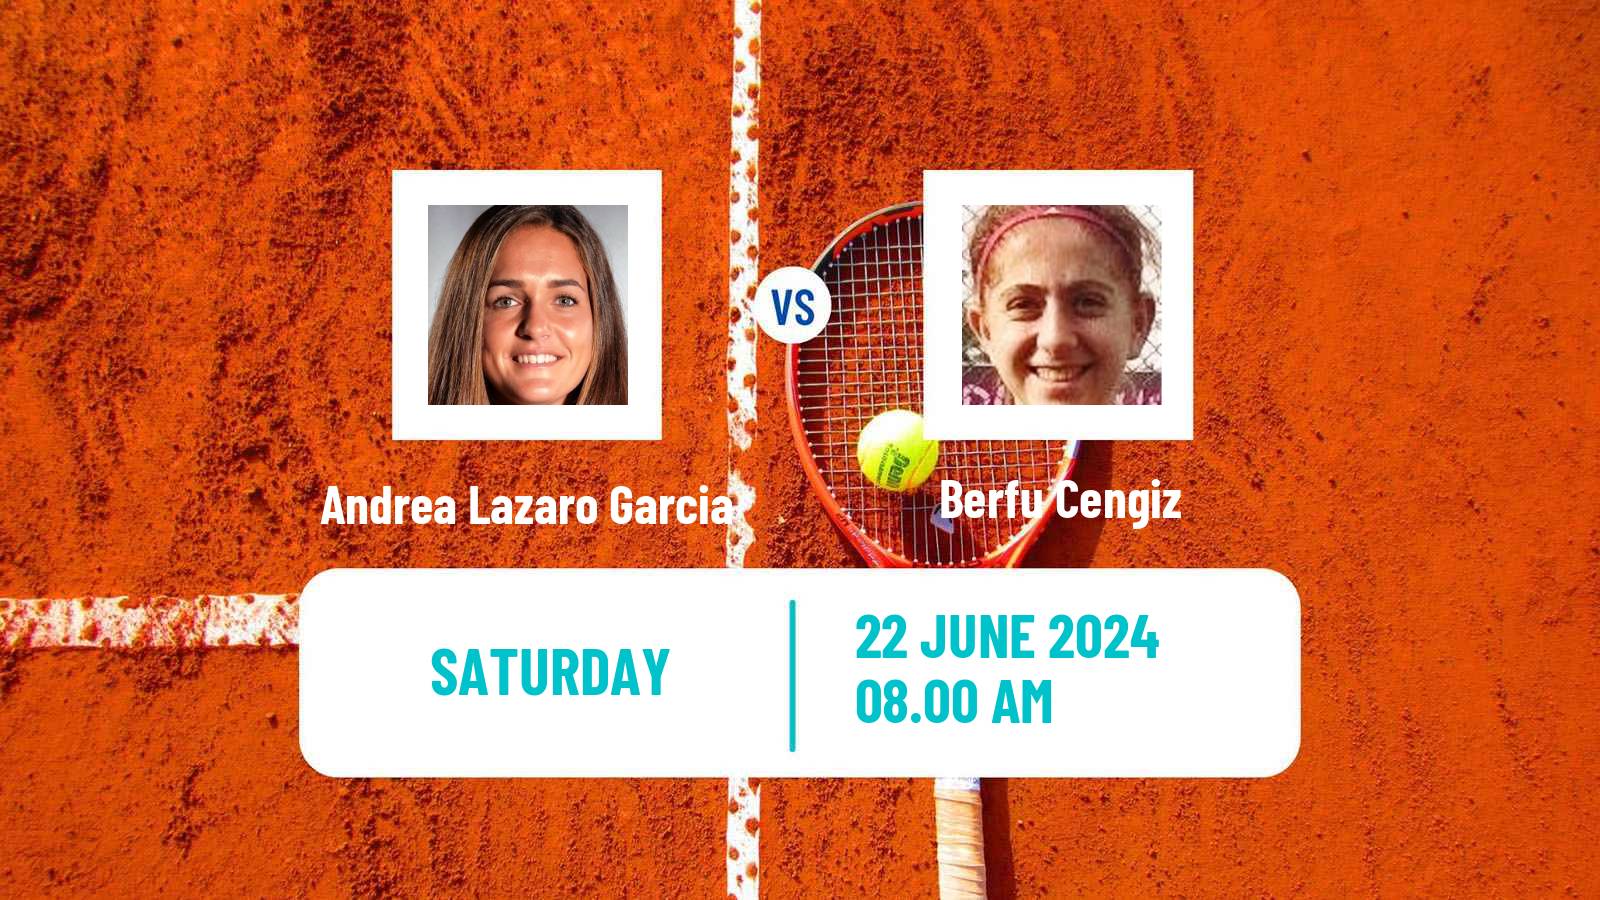 Tennis ITF W50 Ystad Women Andrea Lazaro Garcia - Berfu Cengiz